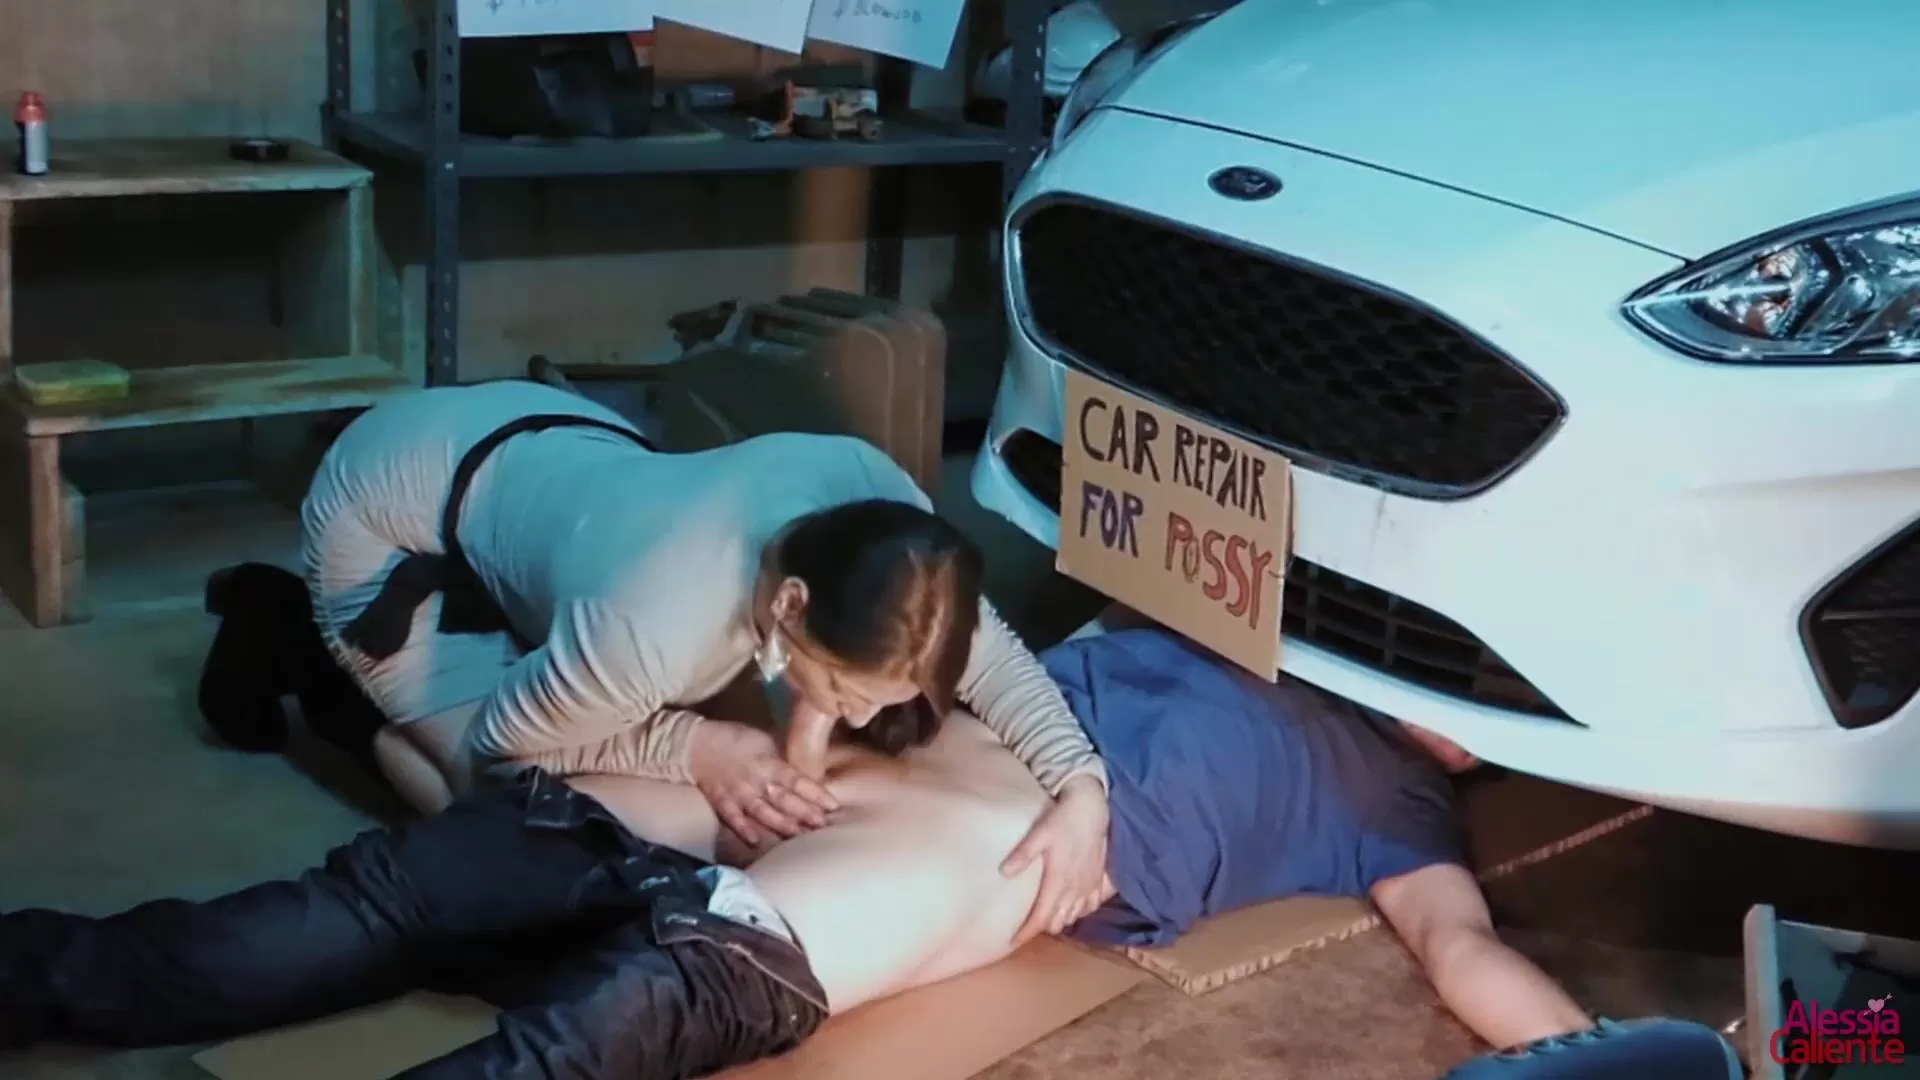 Xxx Full Hd Car Macanik Sex Videos - Slutty Customer Bangs Her Mechanic - Car Repair for Pussy - Alessia  Caliente watch online